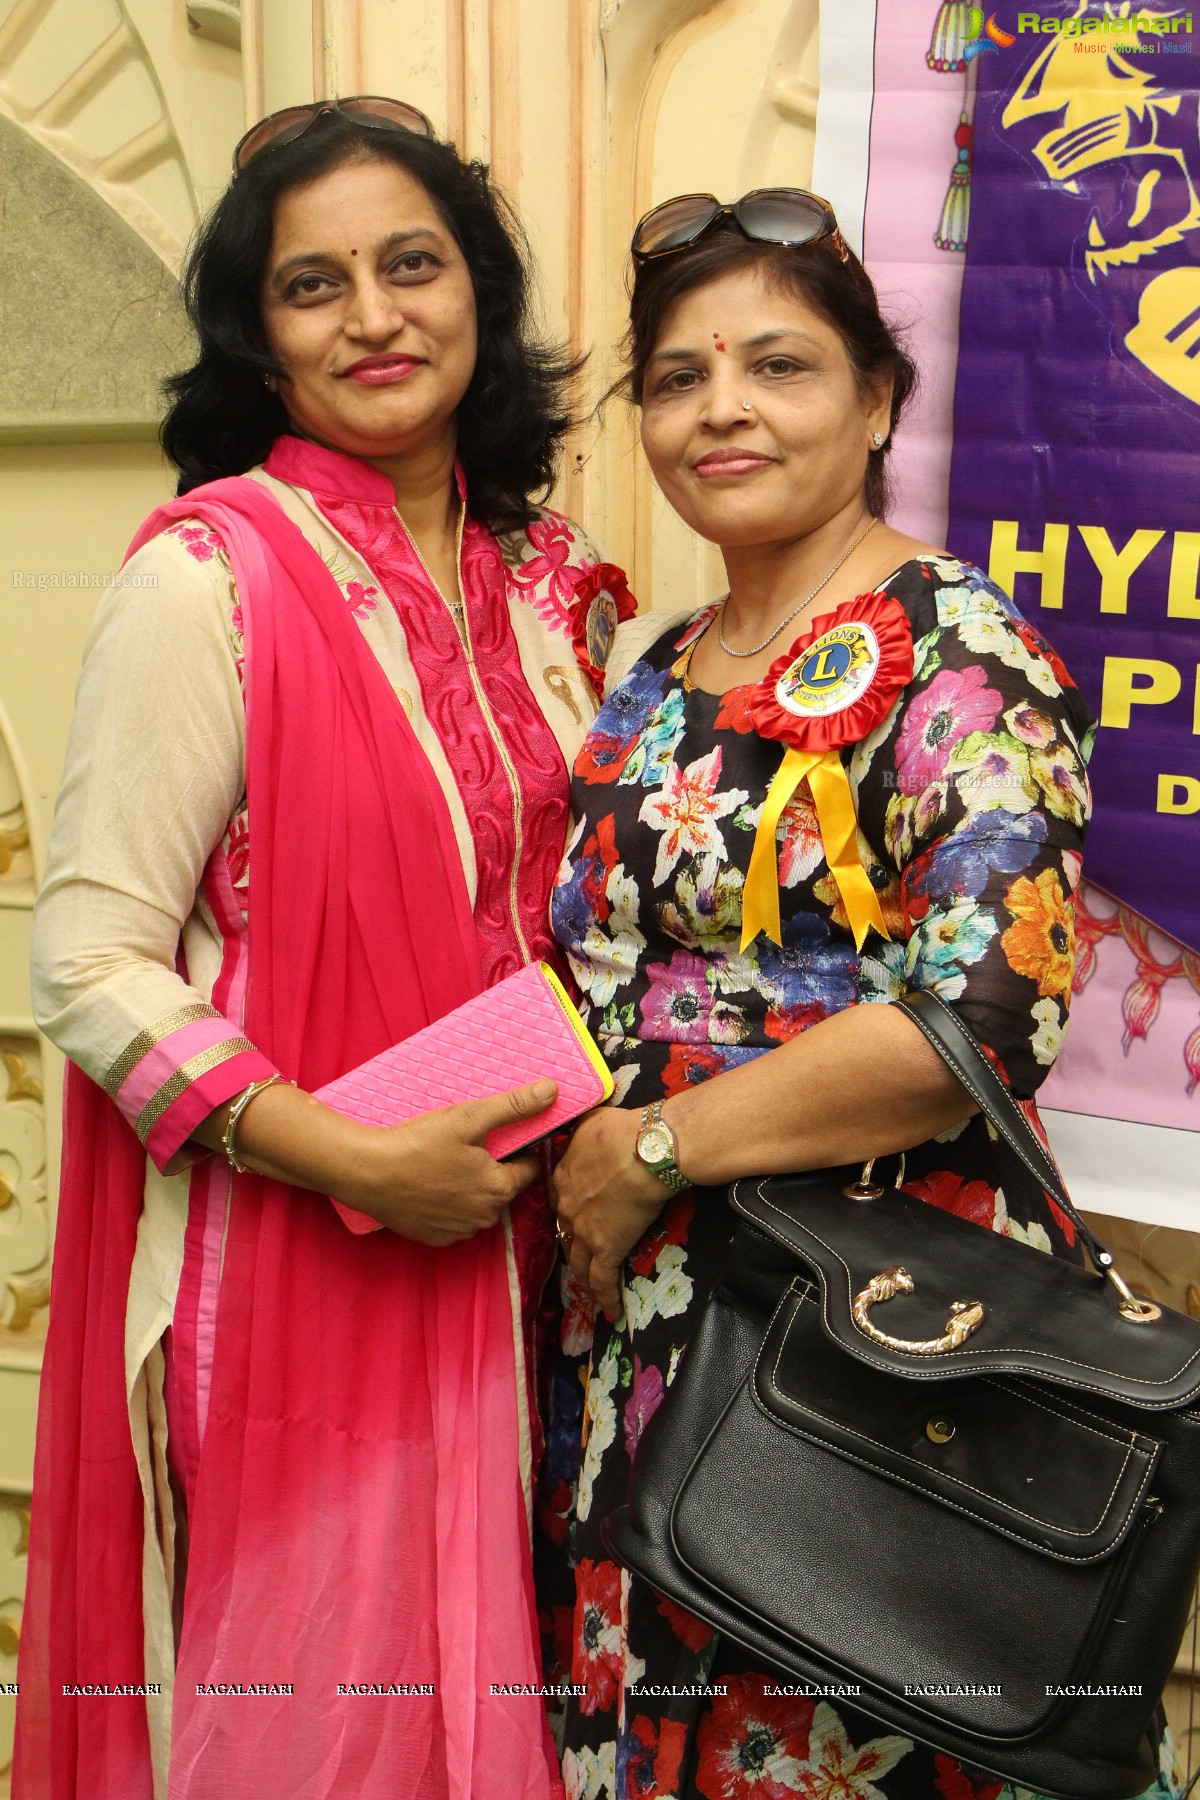 Lions Club of Hyderabad Petals 'Gift a Day Program' at Dhola-Ri-Dhani, Hyderabad